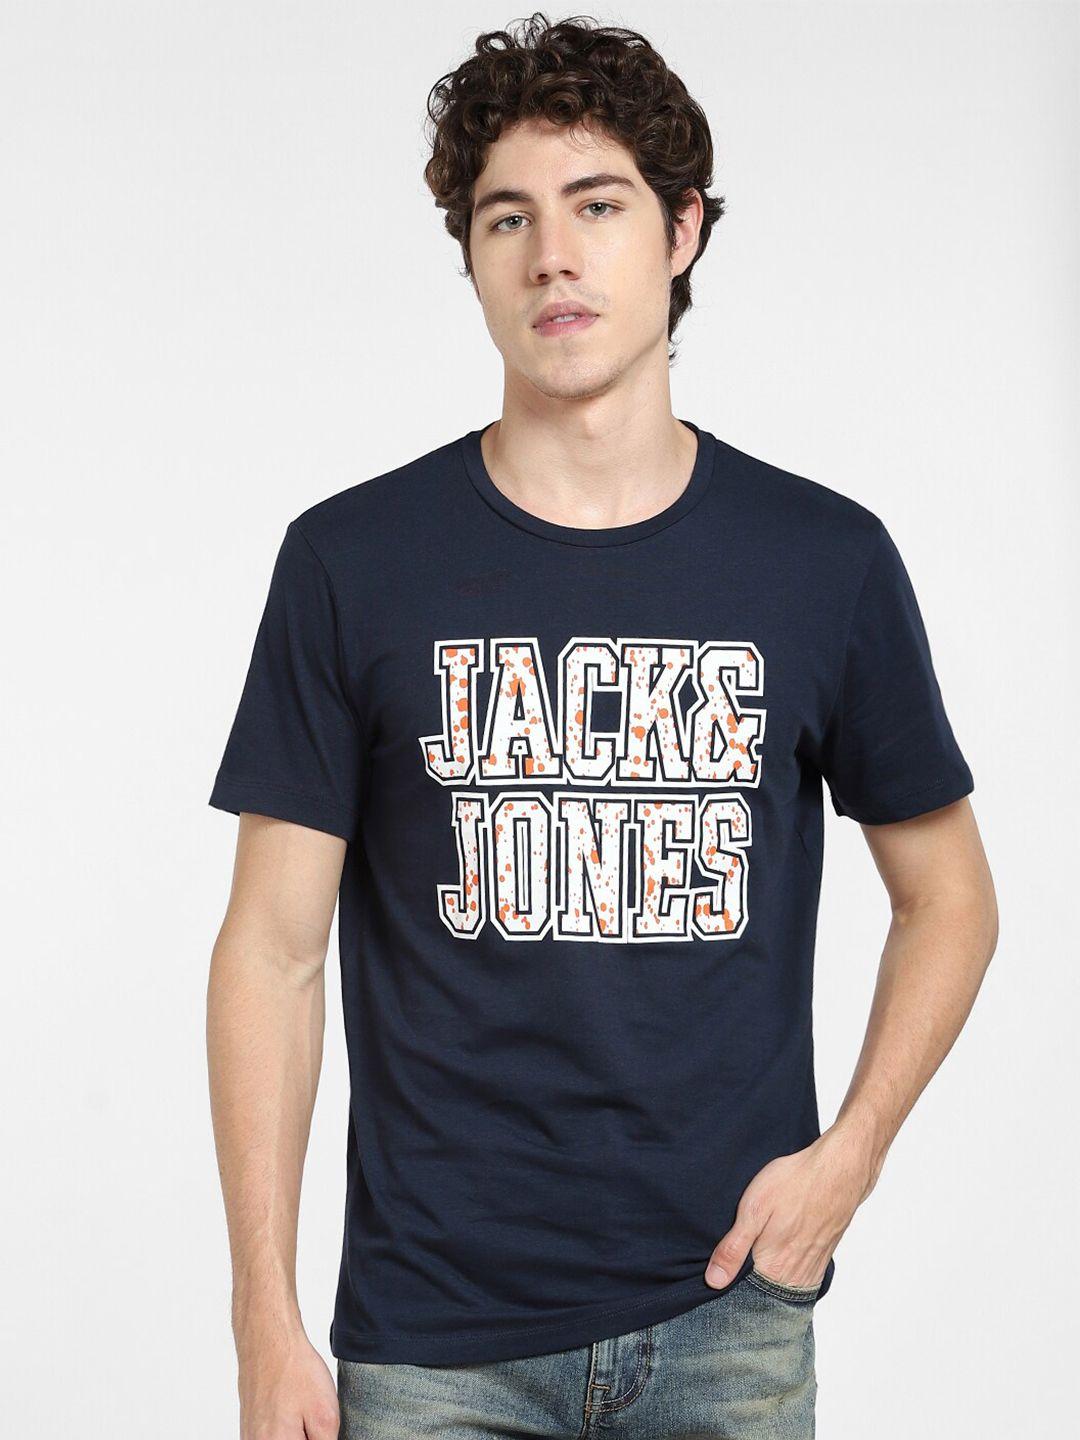 jack & jones men blue & white cotton printed slim fit t-shirt